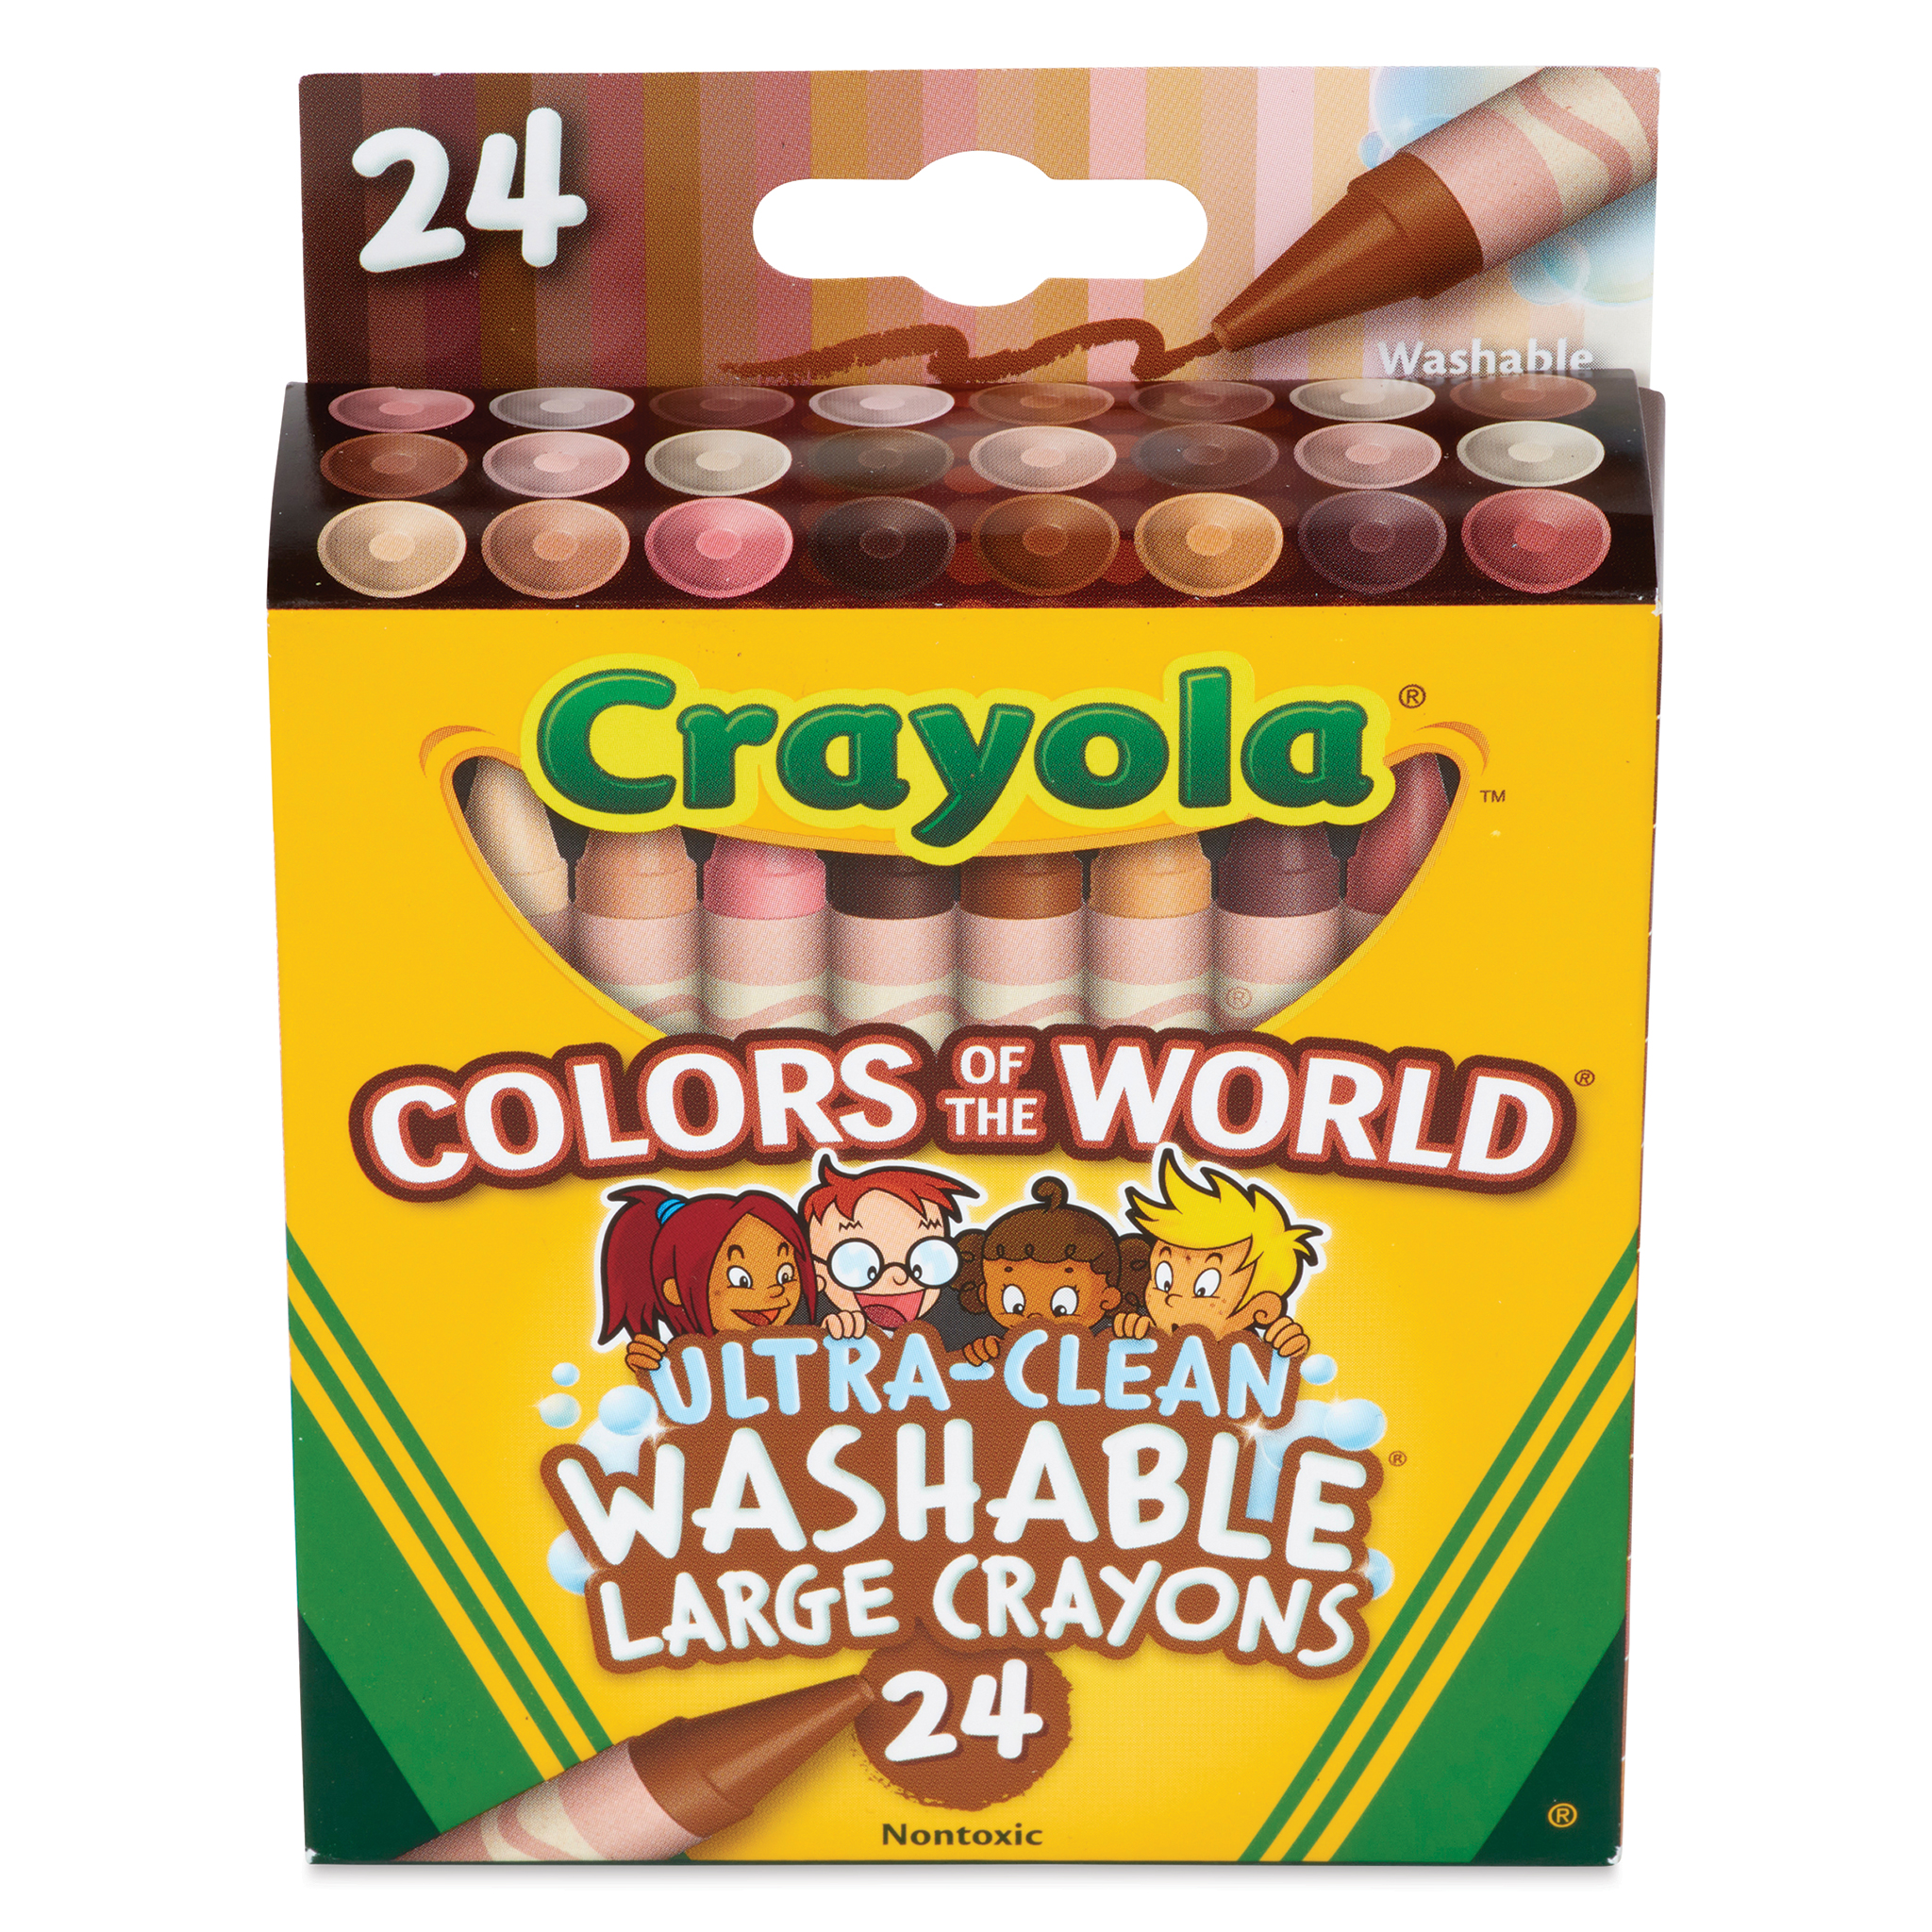 Crayola Large Crayons - Box of 12, White